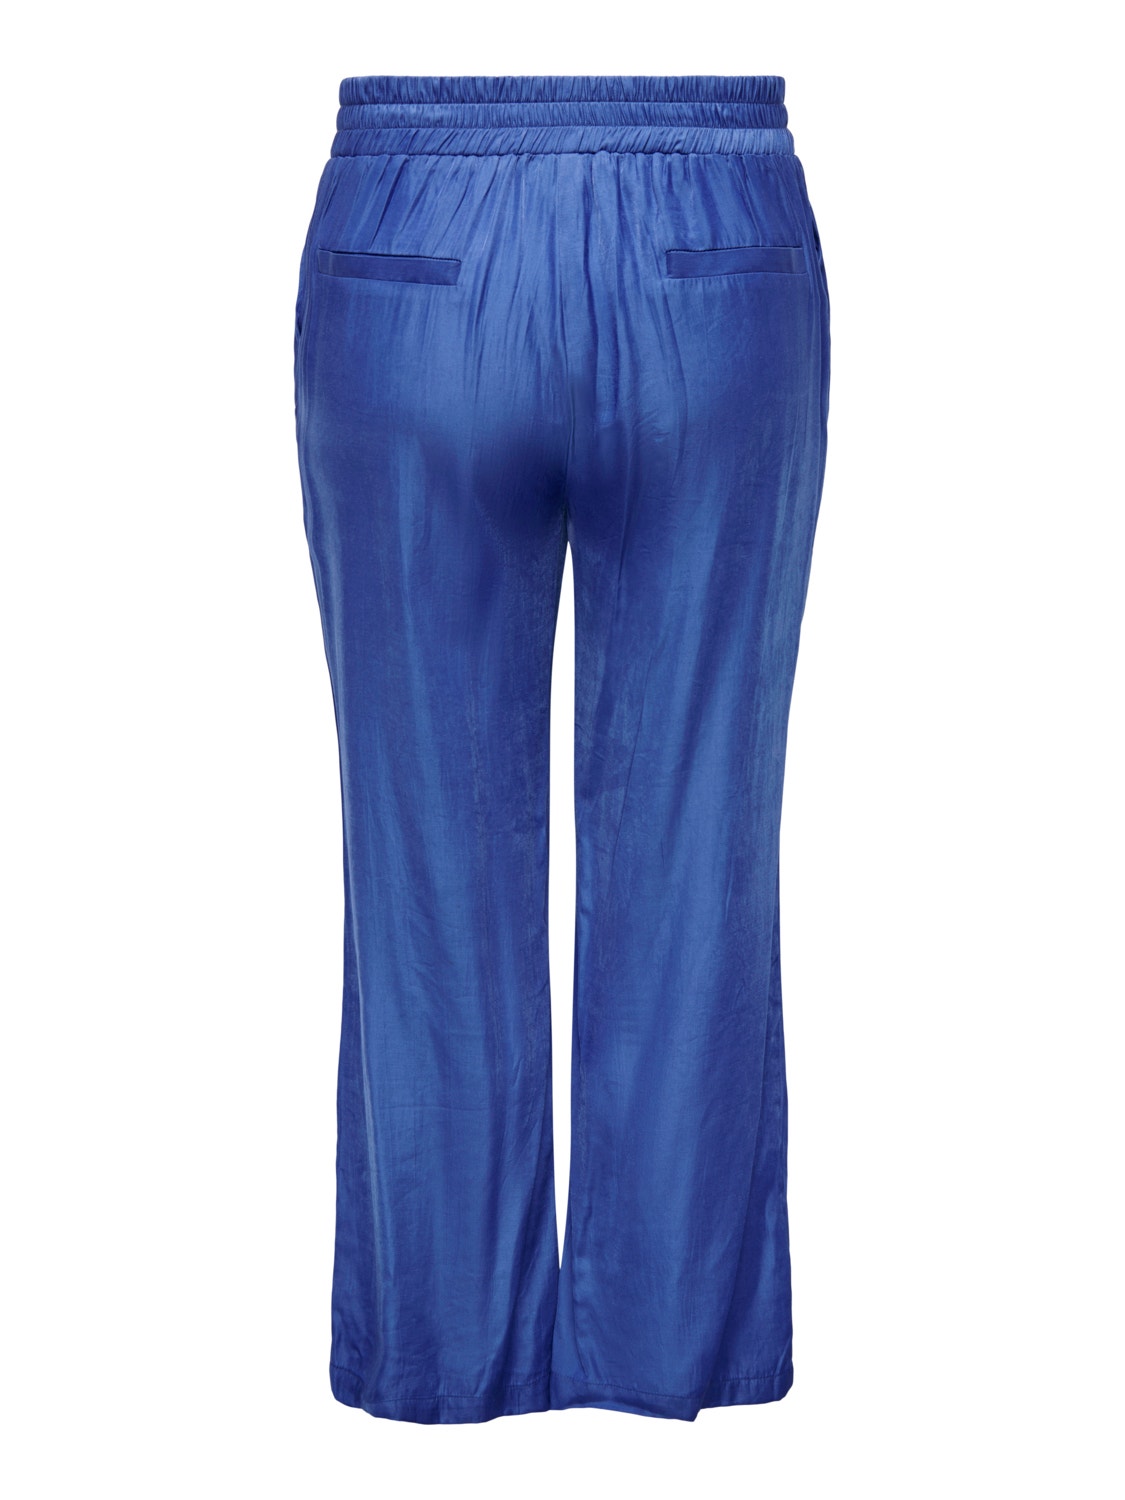 ONLY Normal geschnitten Sehr niedrige Taille Hose -Dazzling Blue - 15291596